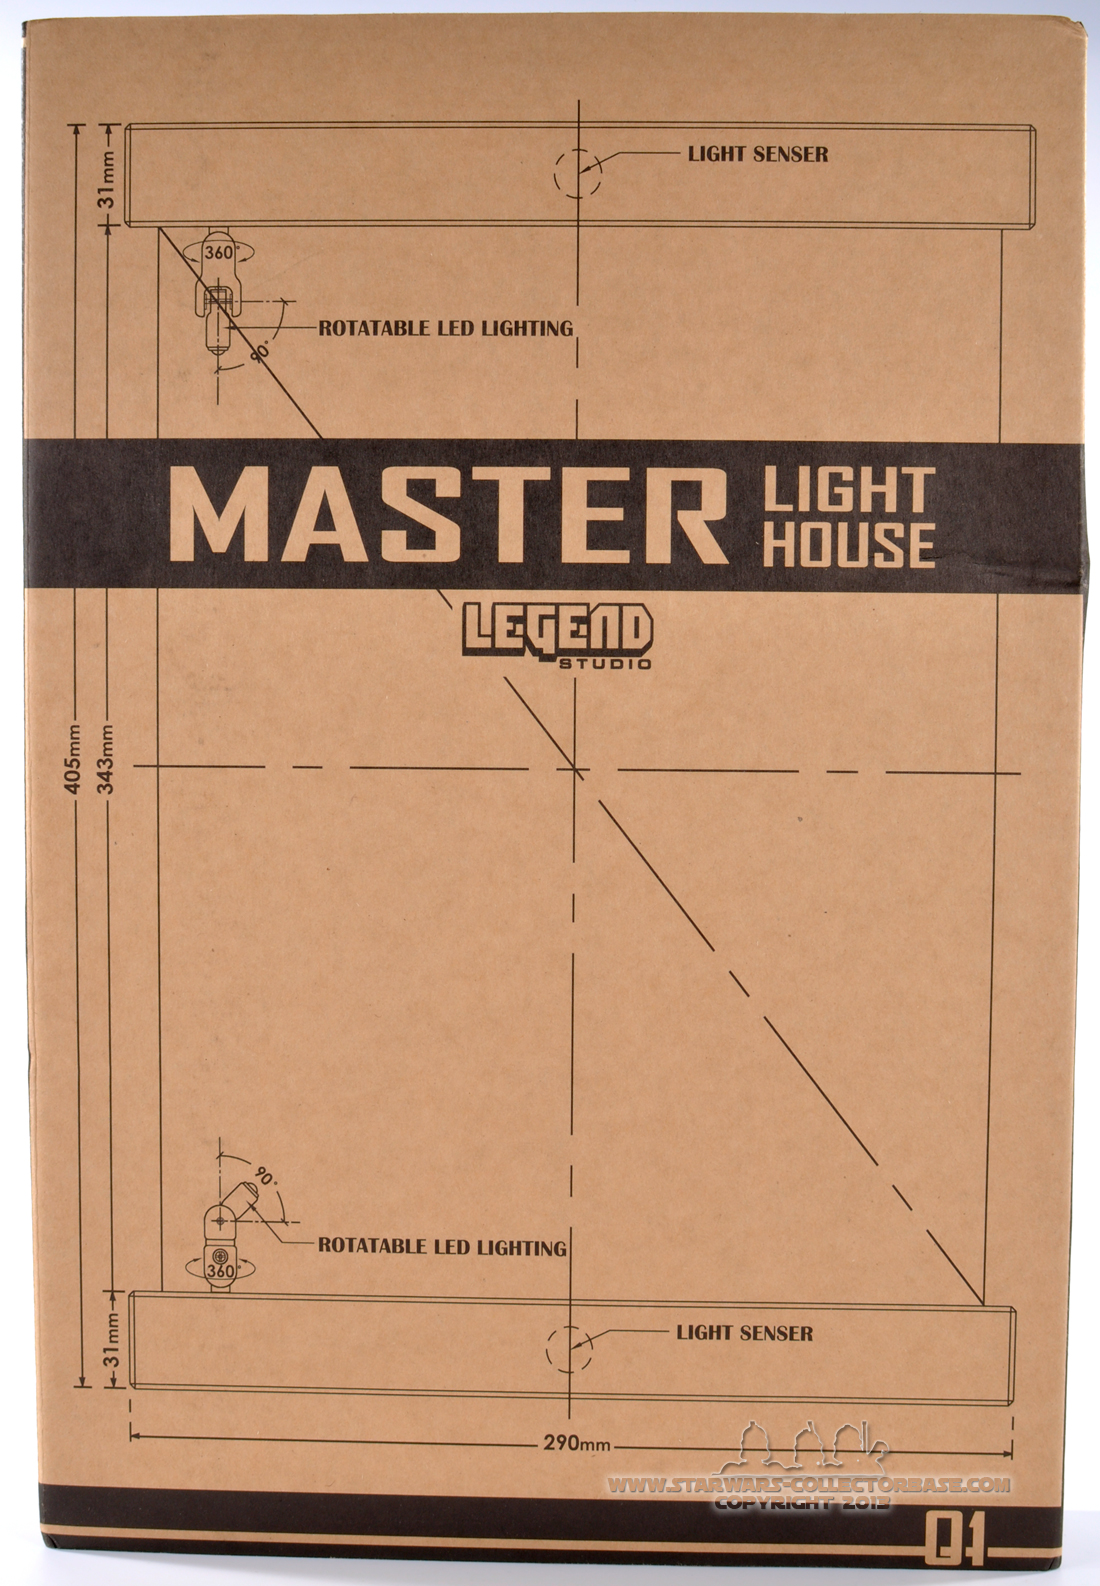 Master Light House - Legend Studio